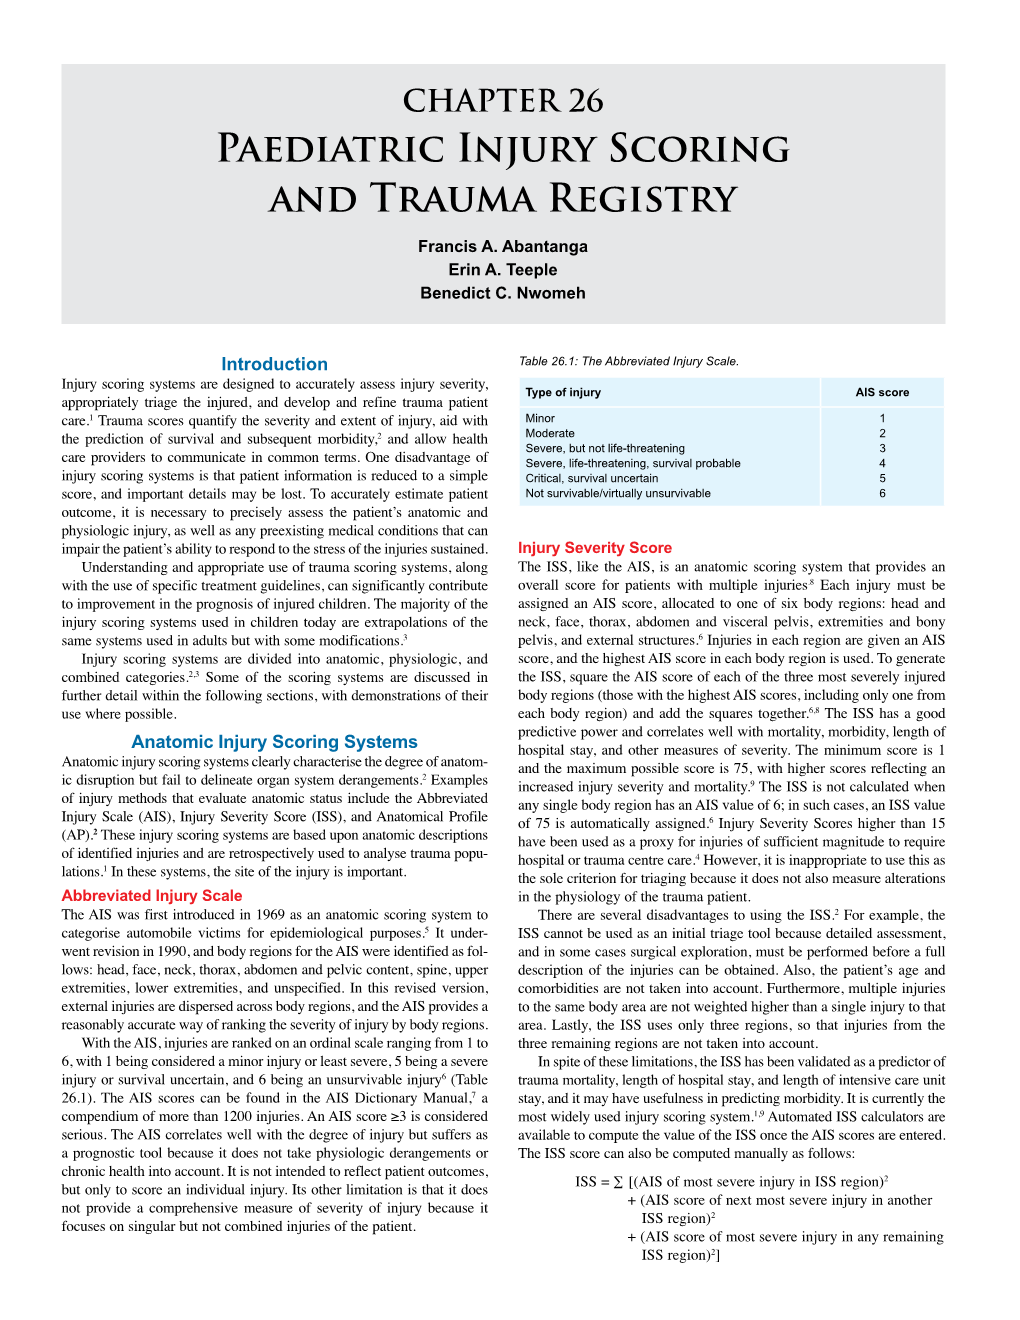 Paediatric Injury Scoring and Trauma Registry